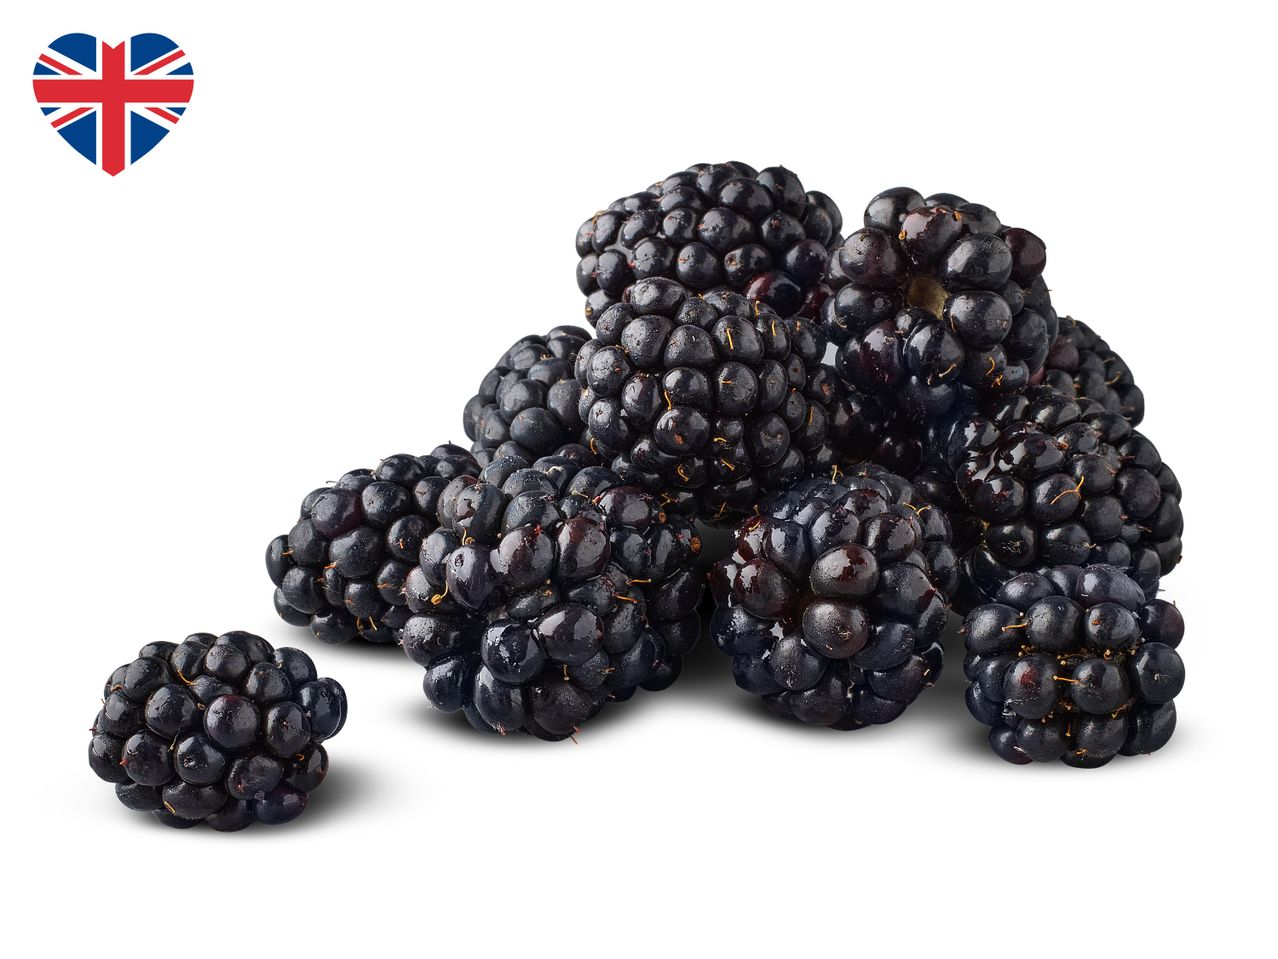 Go to full screen view: British Blackberries - Image 1